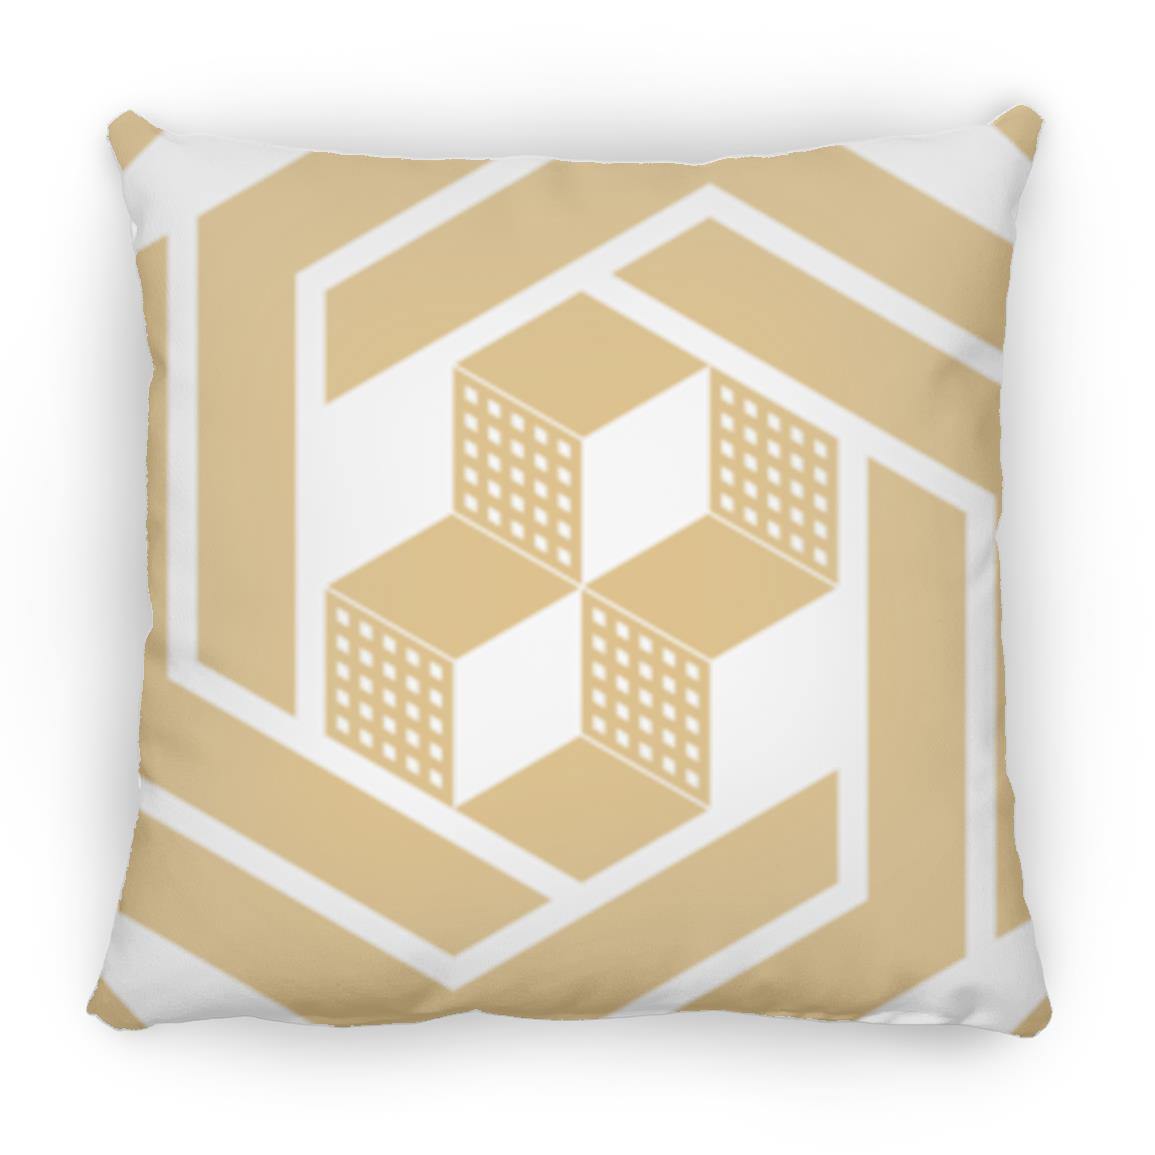 Crop Circle Pillow - Stanton St Bernard - Shapes of Wisdom